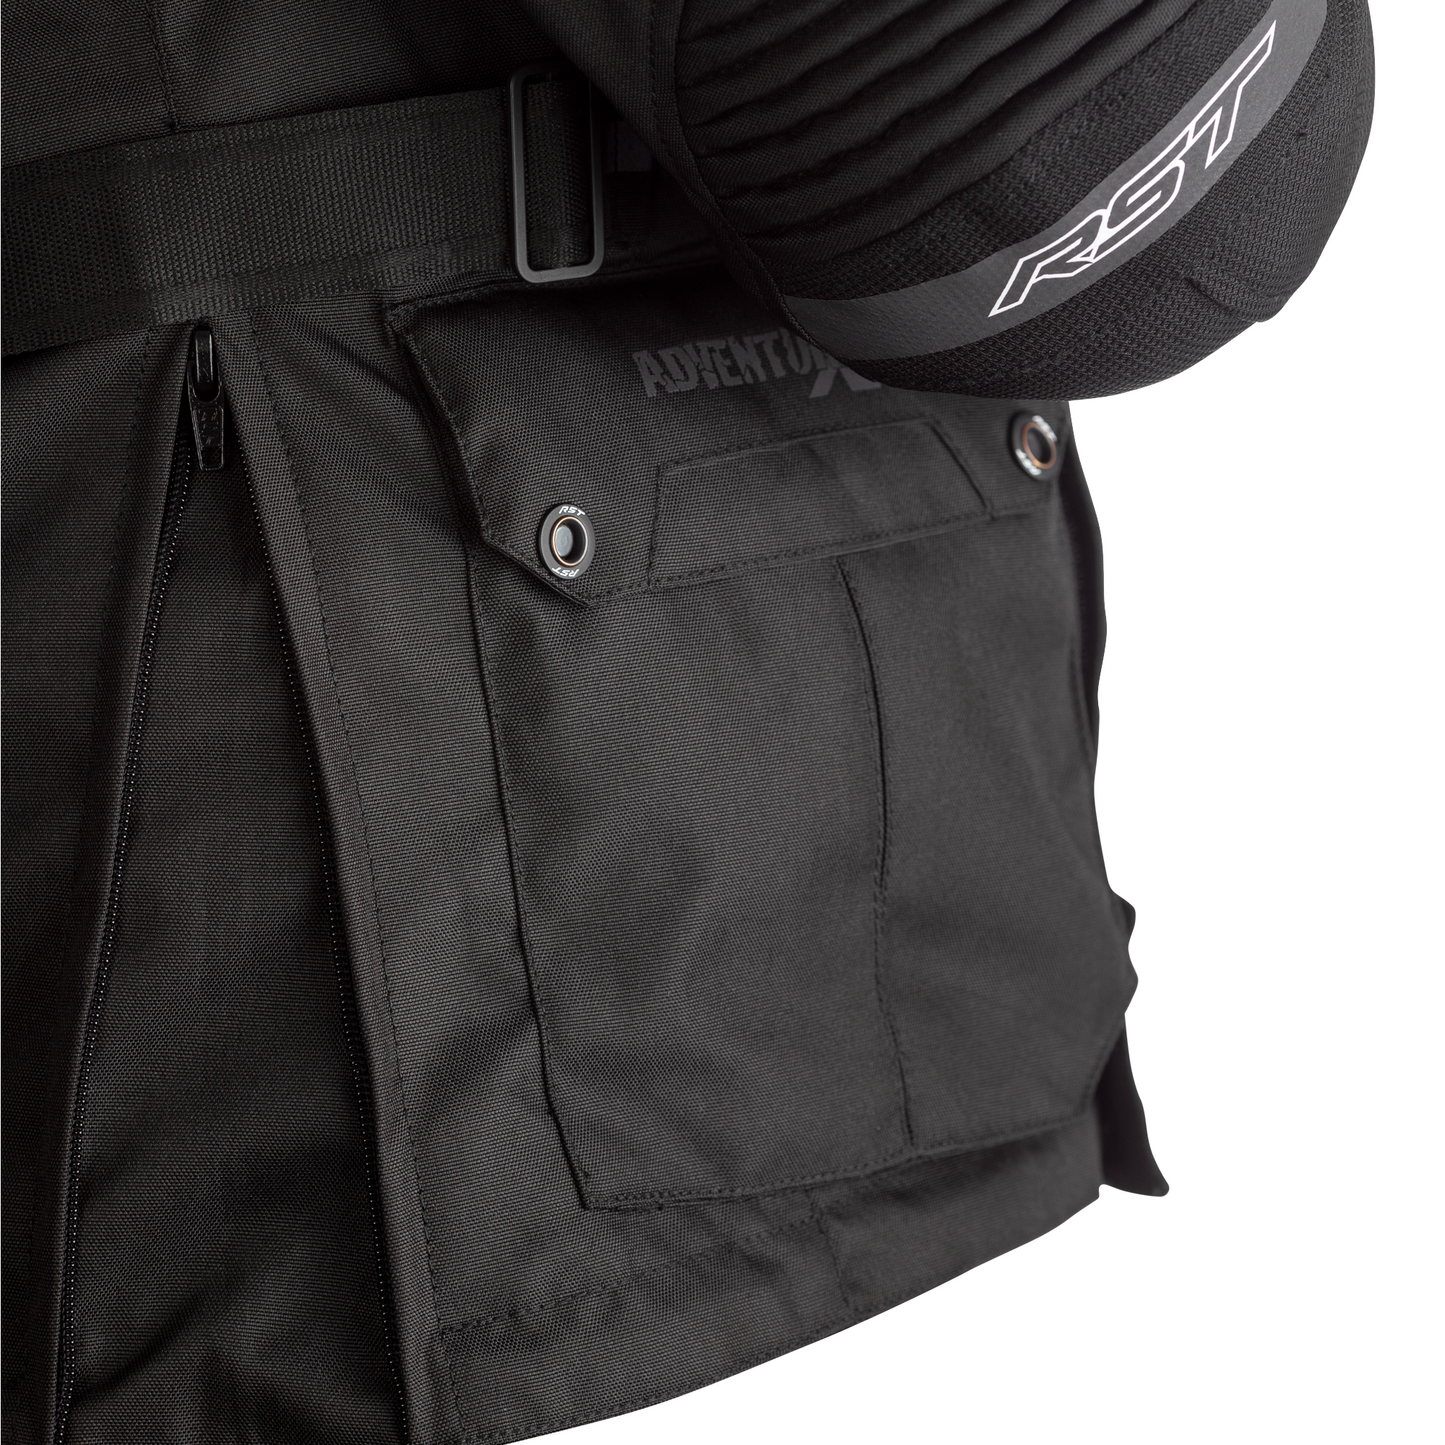 RST Adventure-X CE Ladies Textile Jacket - Black